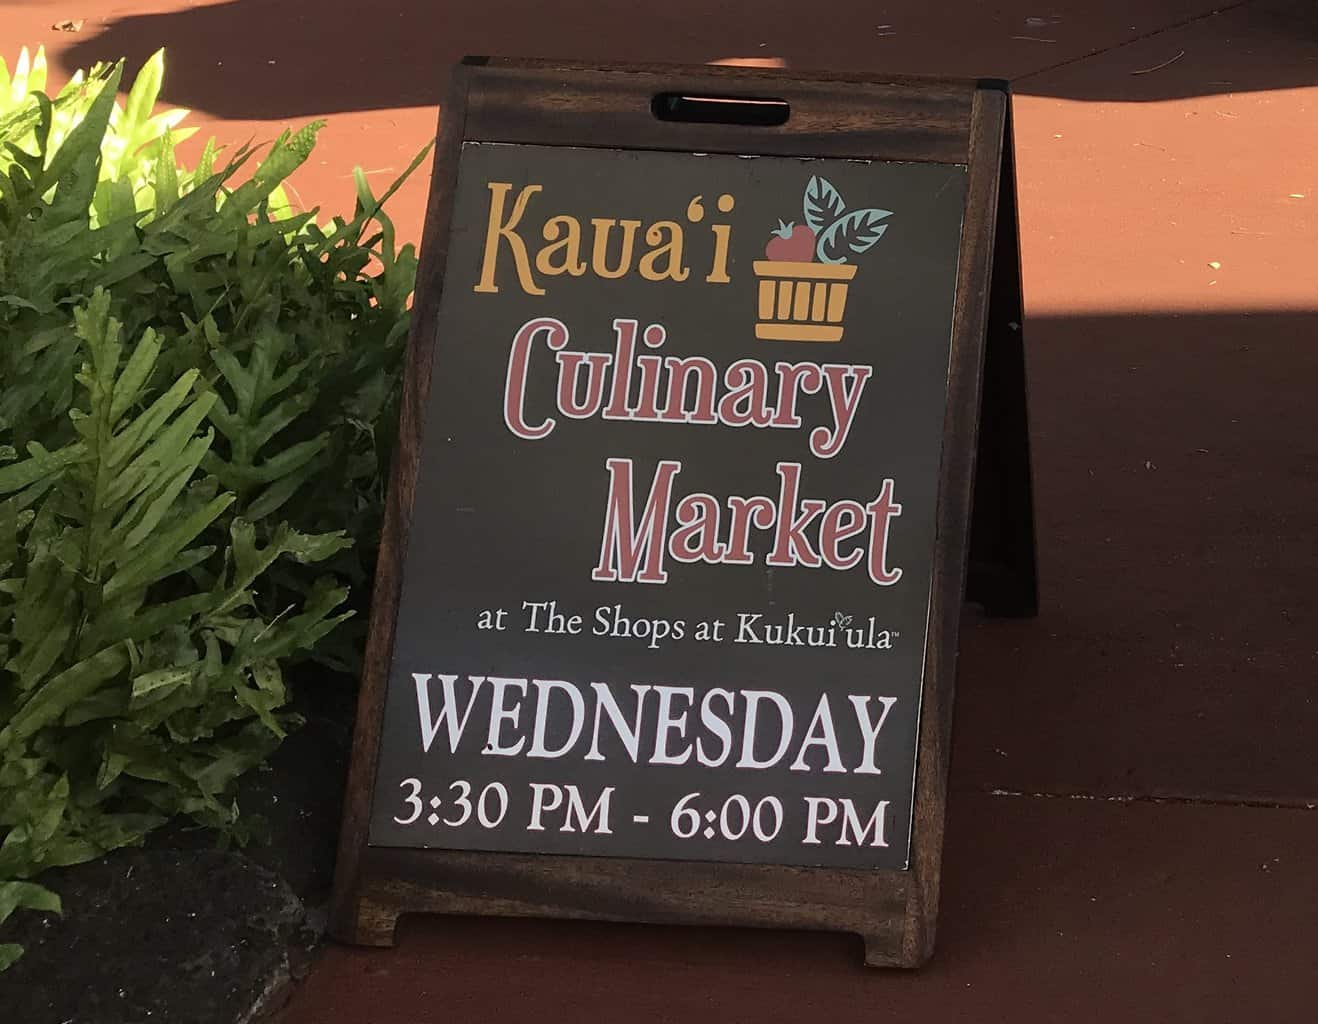 Kauai Culinary Market